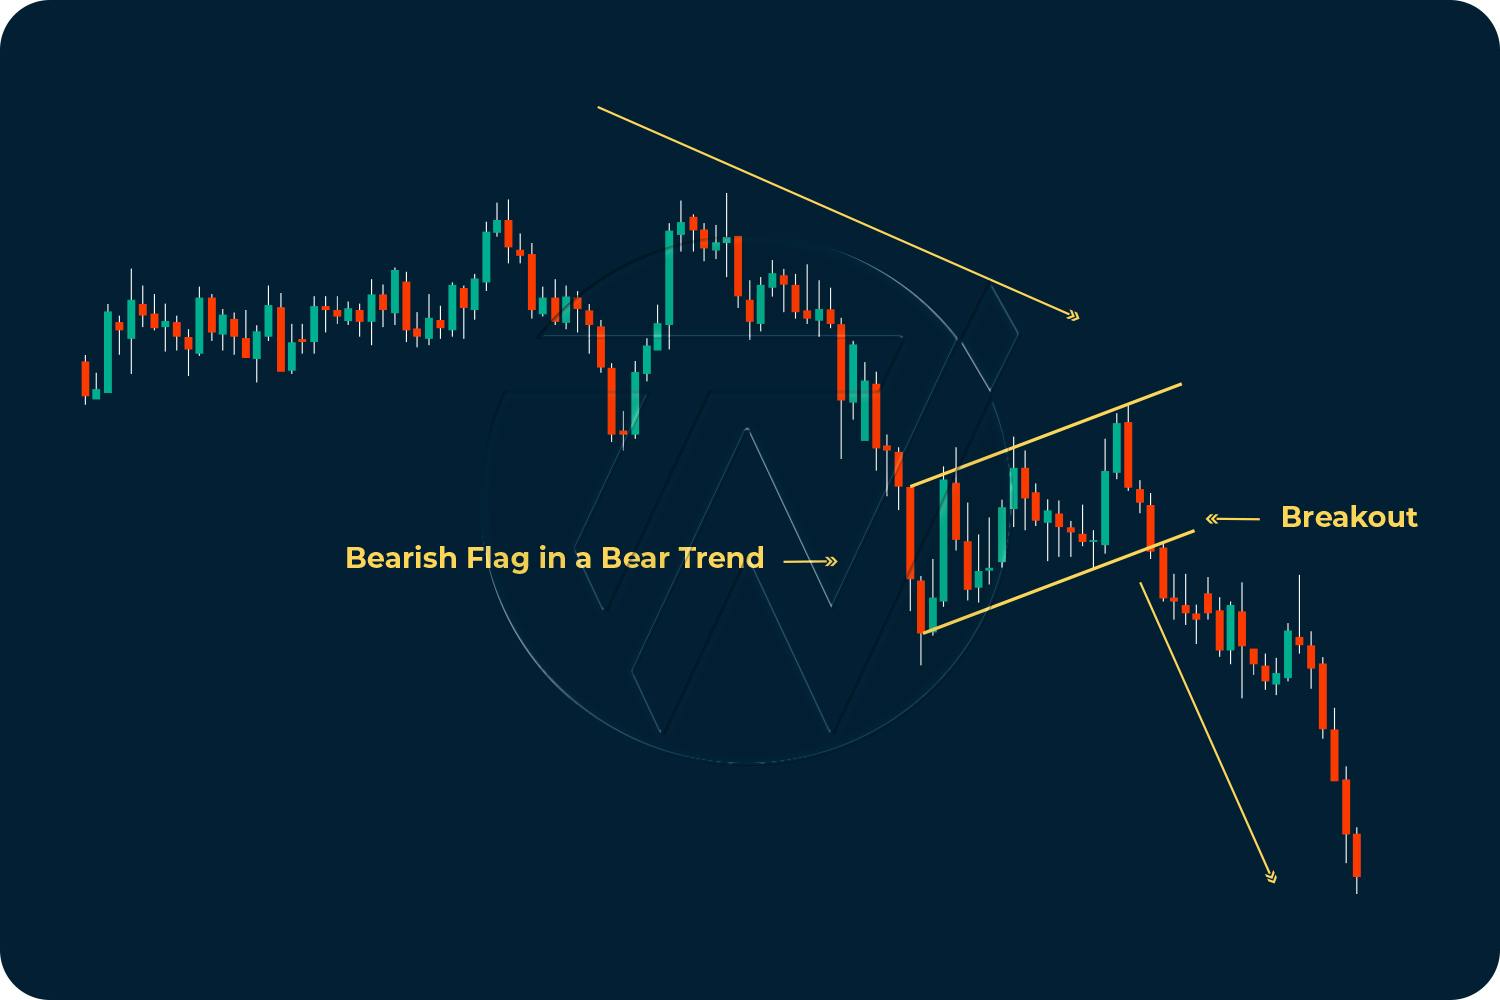 Candlestick chart patterns illustrating bearish flag in bear trend